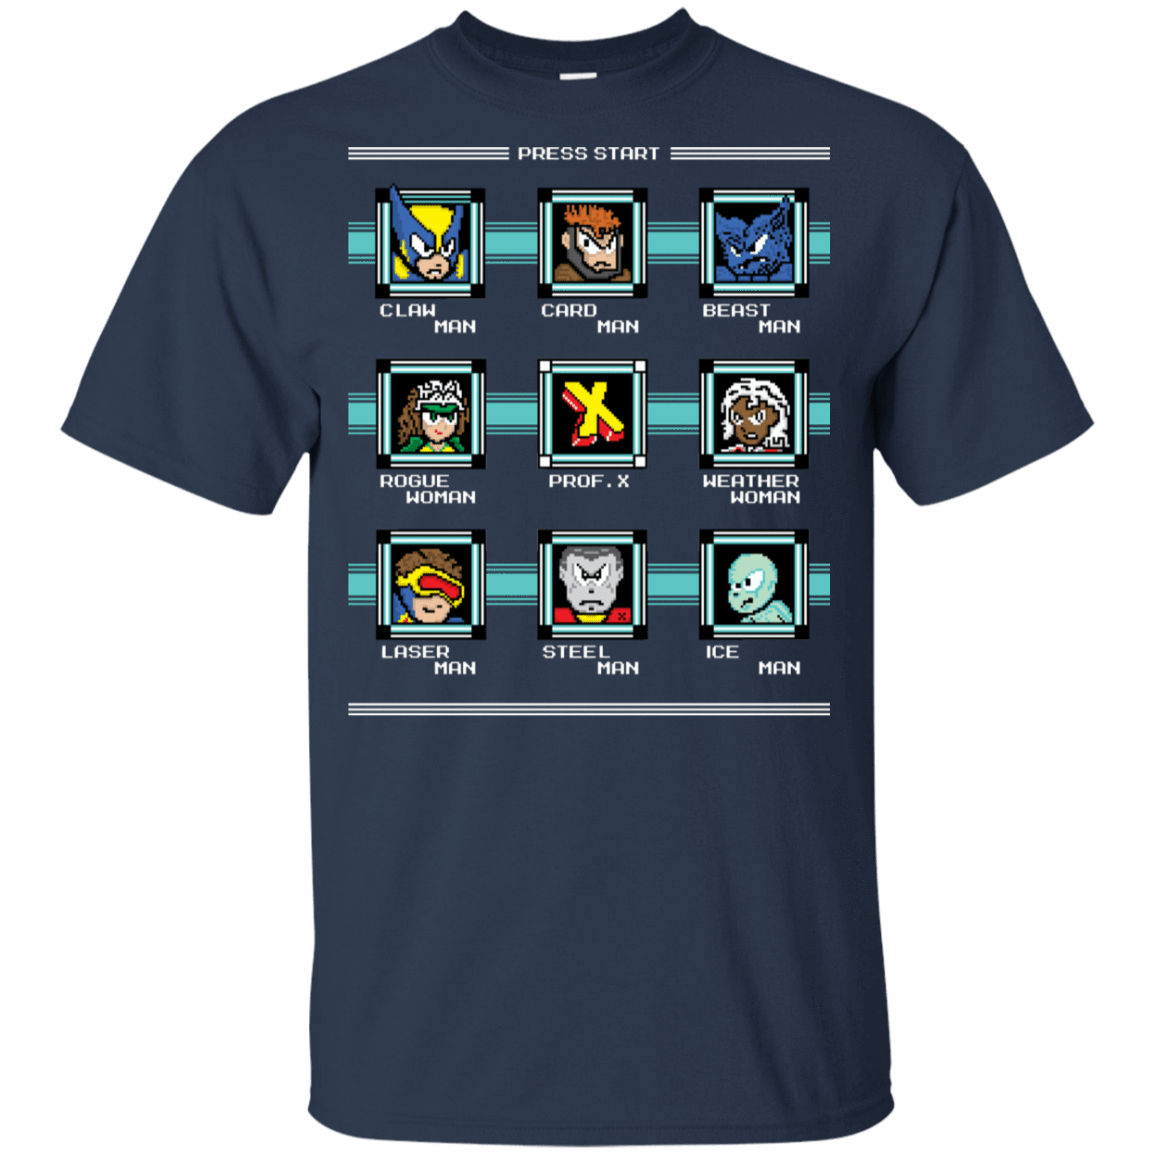 T-Shirts Navy / YXS Mega X-Man Youth T-Shirt